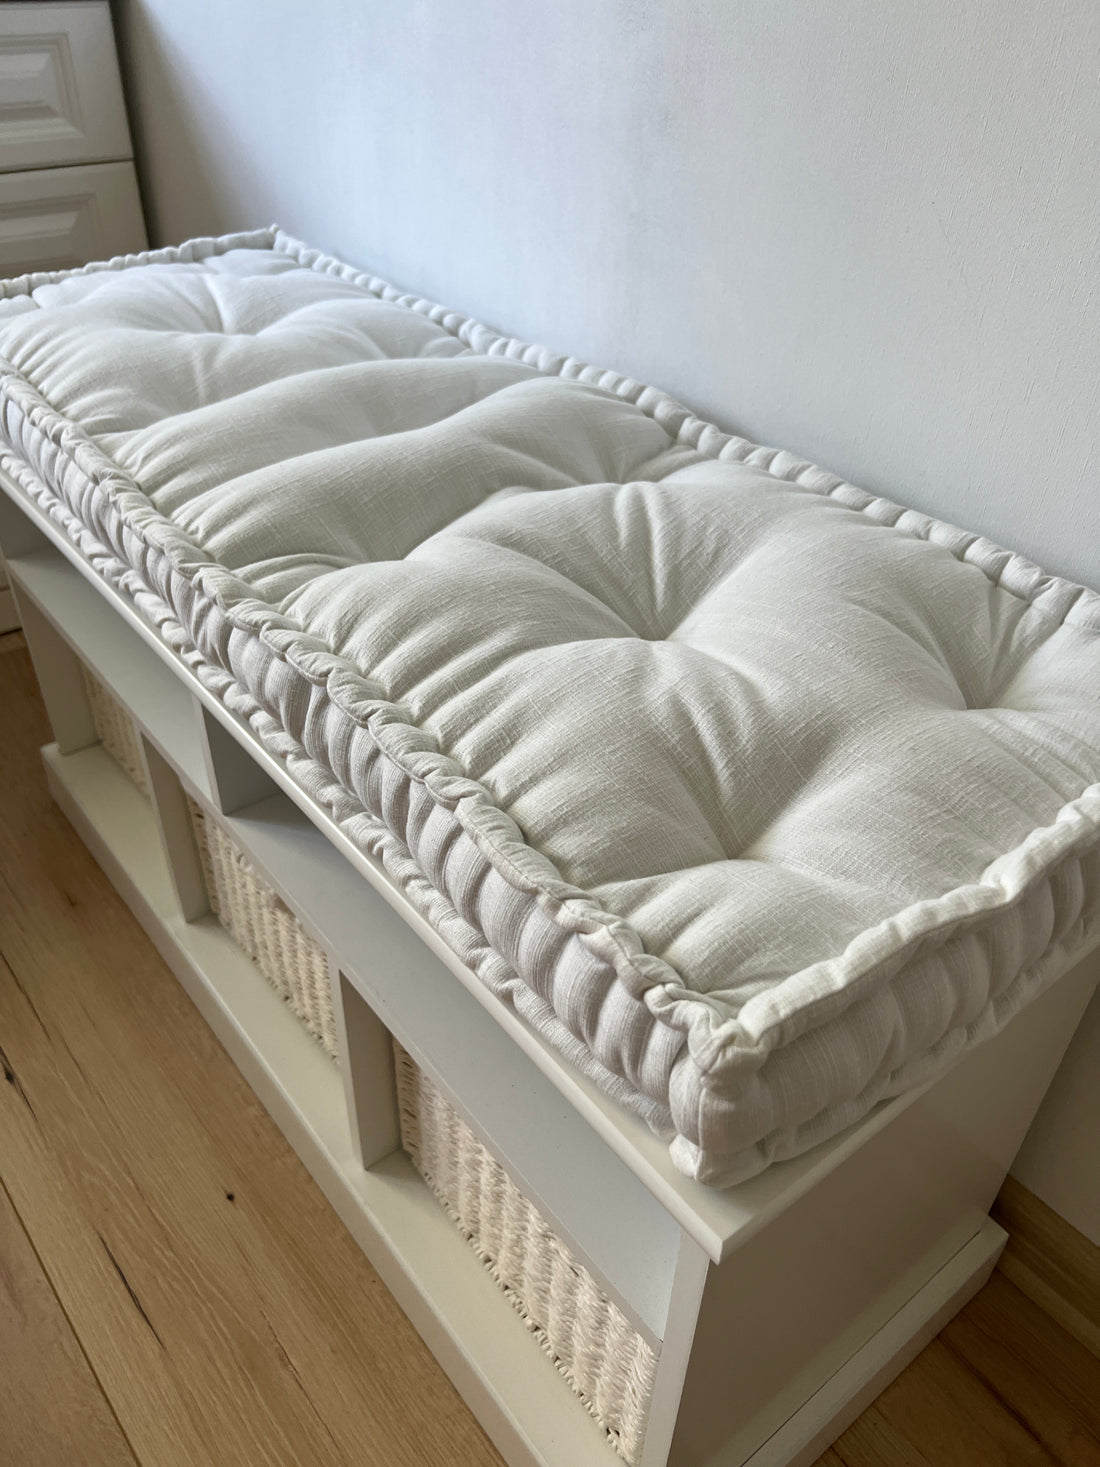 White Hemp Linen Window Mudroom Floor Bench Cushion filled organic Hemp Fiber filling in Linen Fabric Custom Made